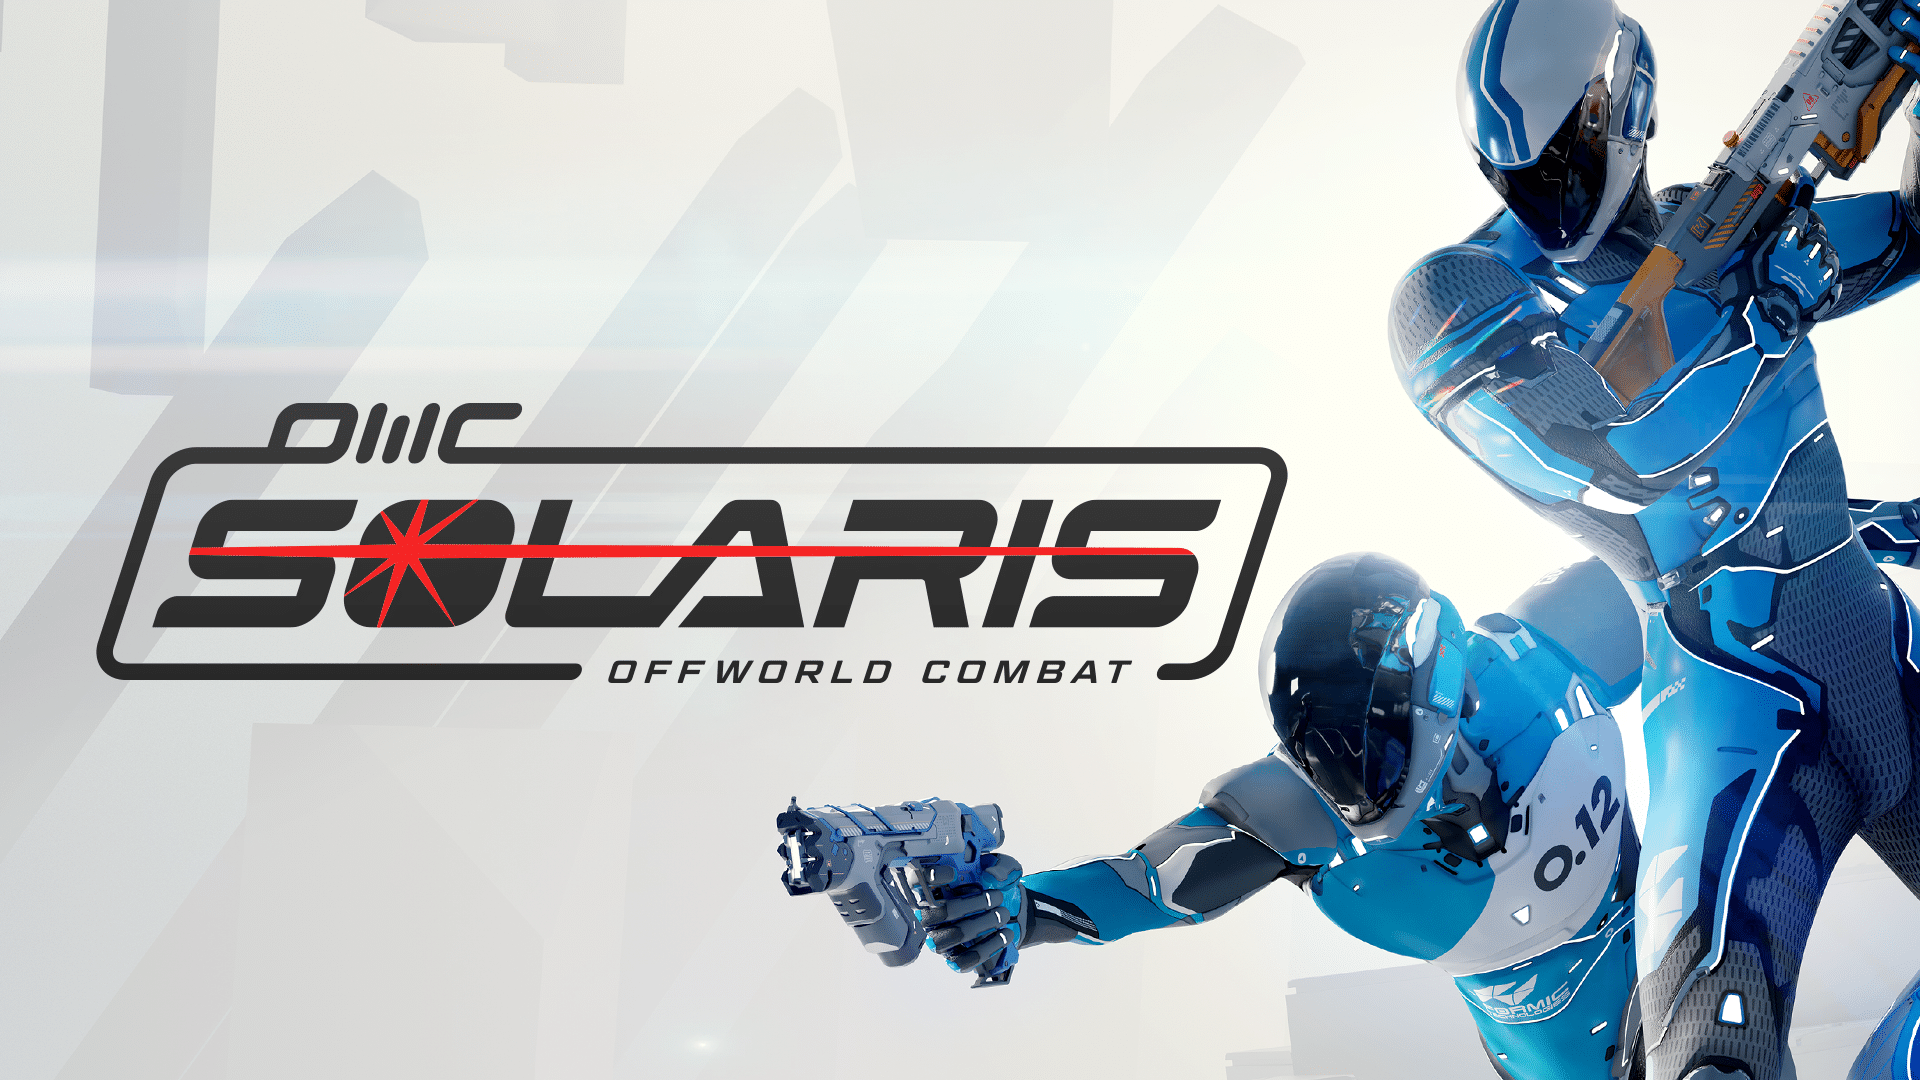 Solaris: Offworld Combat saldrá para PlayStation VR la próxima primavera